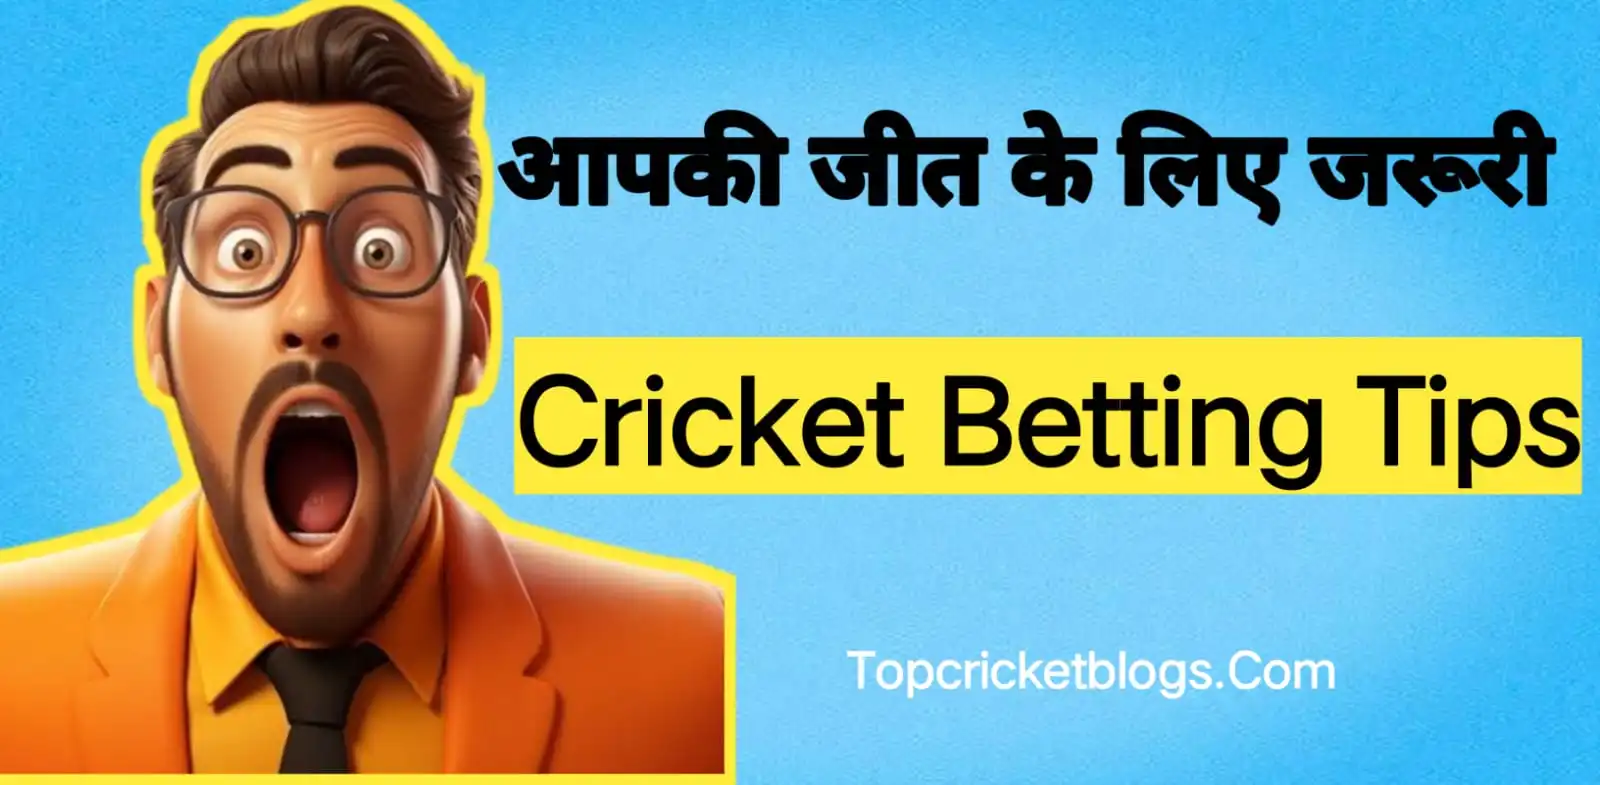 Cricket Betting Tips in hindi